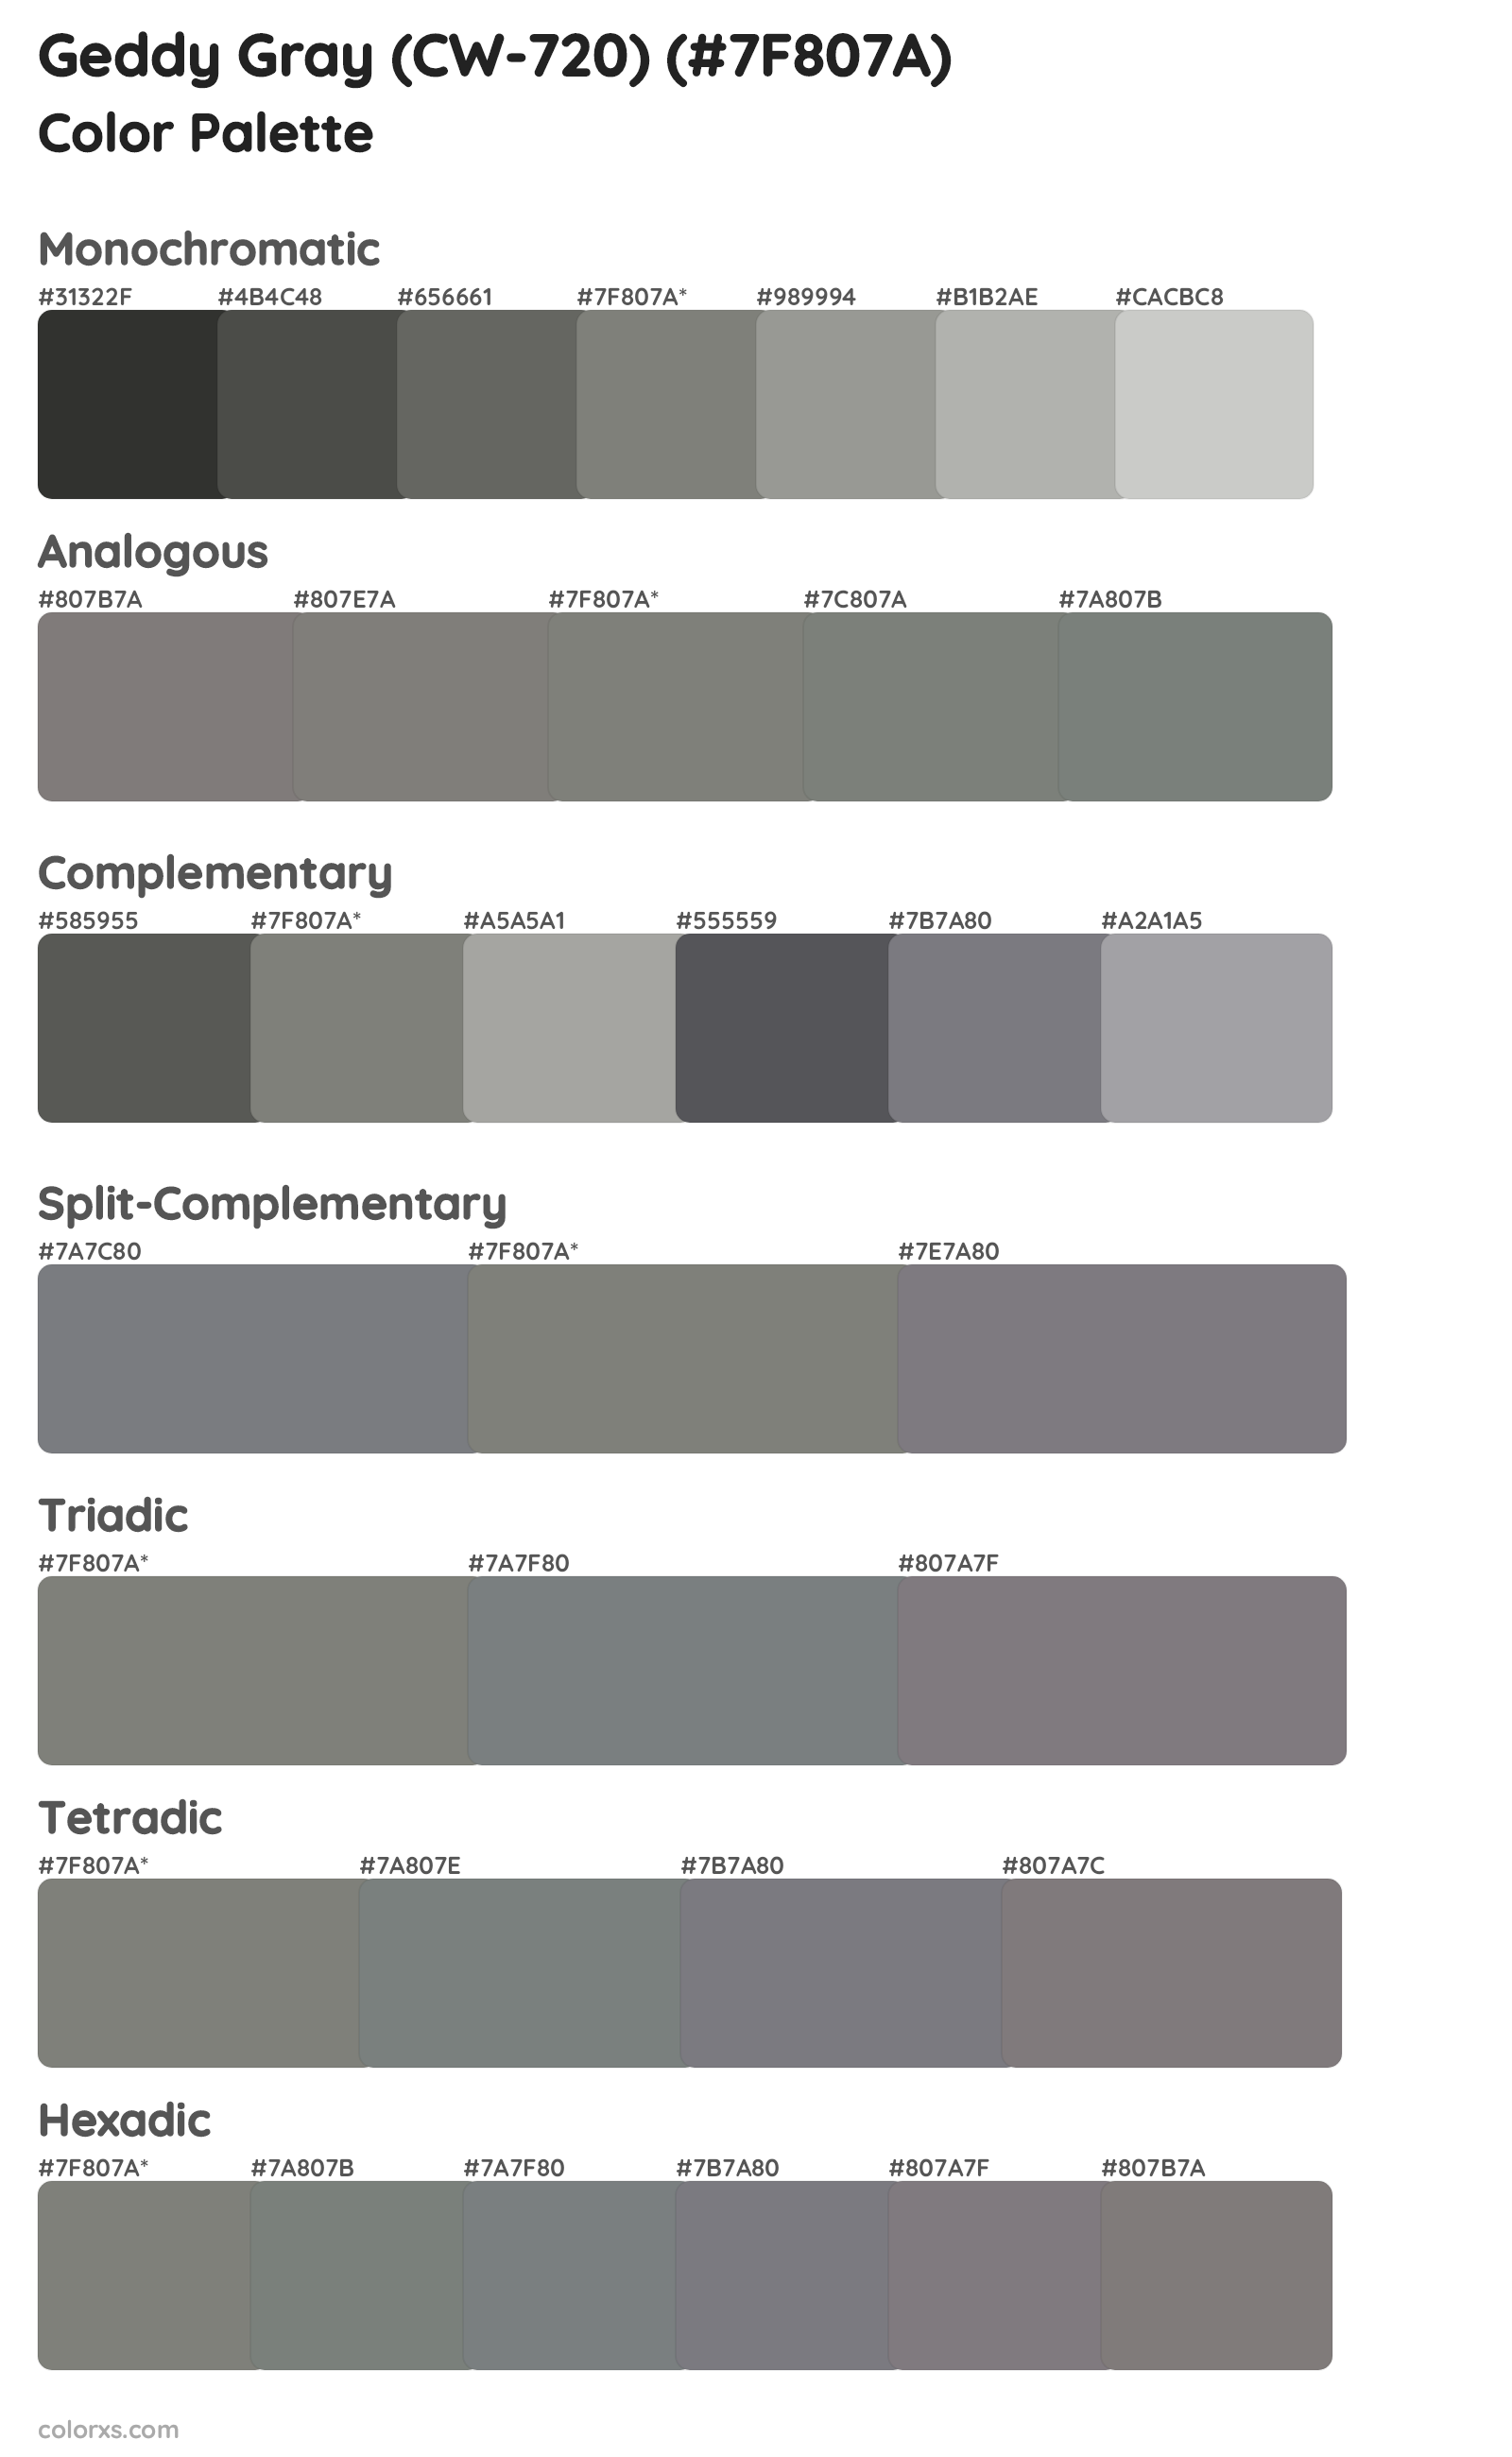 Geddy Gray (CW-720) Color Scheme Palettes